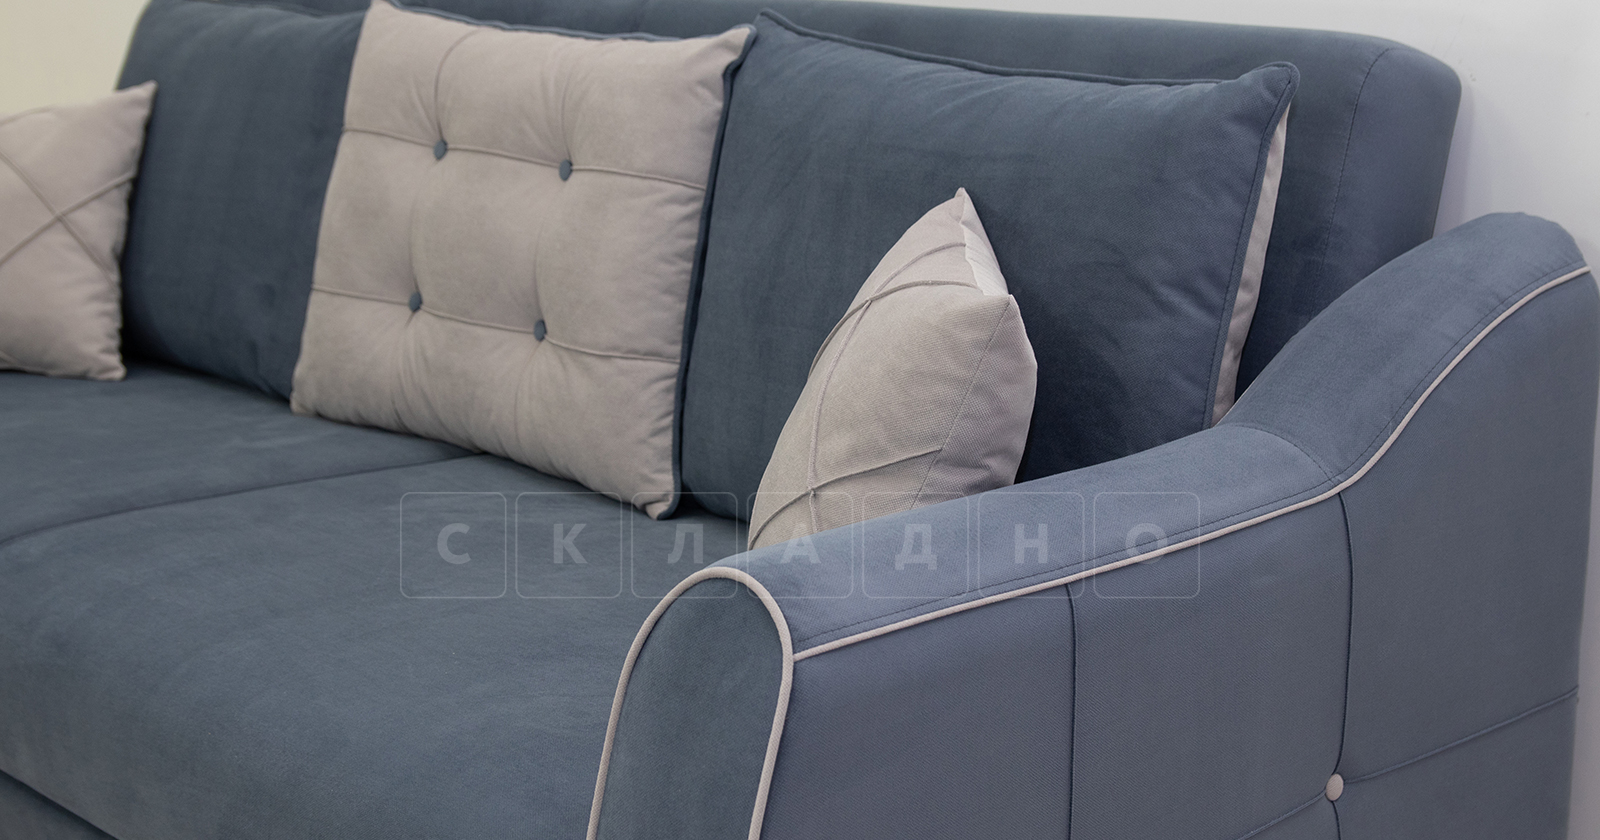 Диван-кровать Флэтфорд серо-синий фото 8 | интернет-магазин Складно